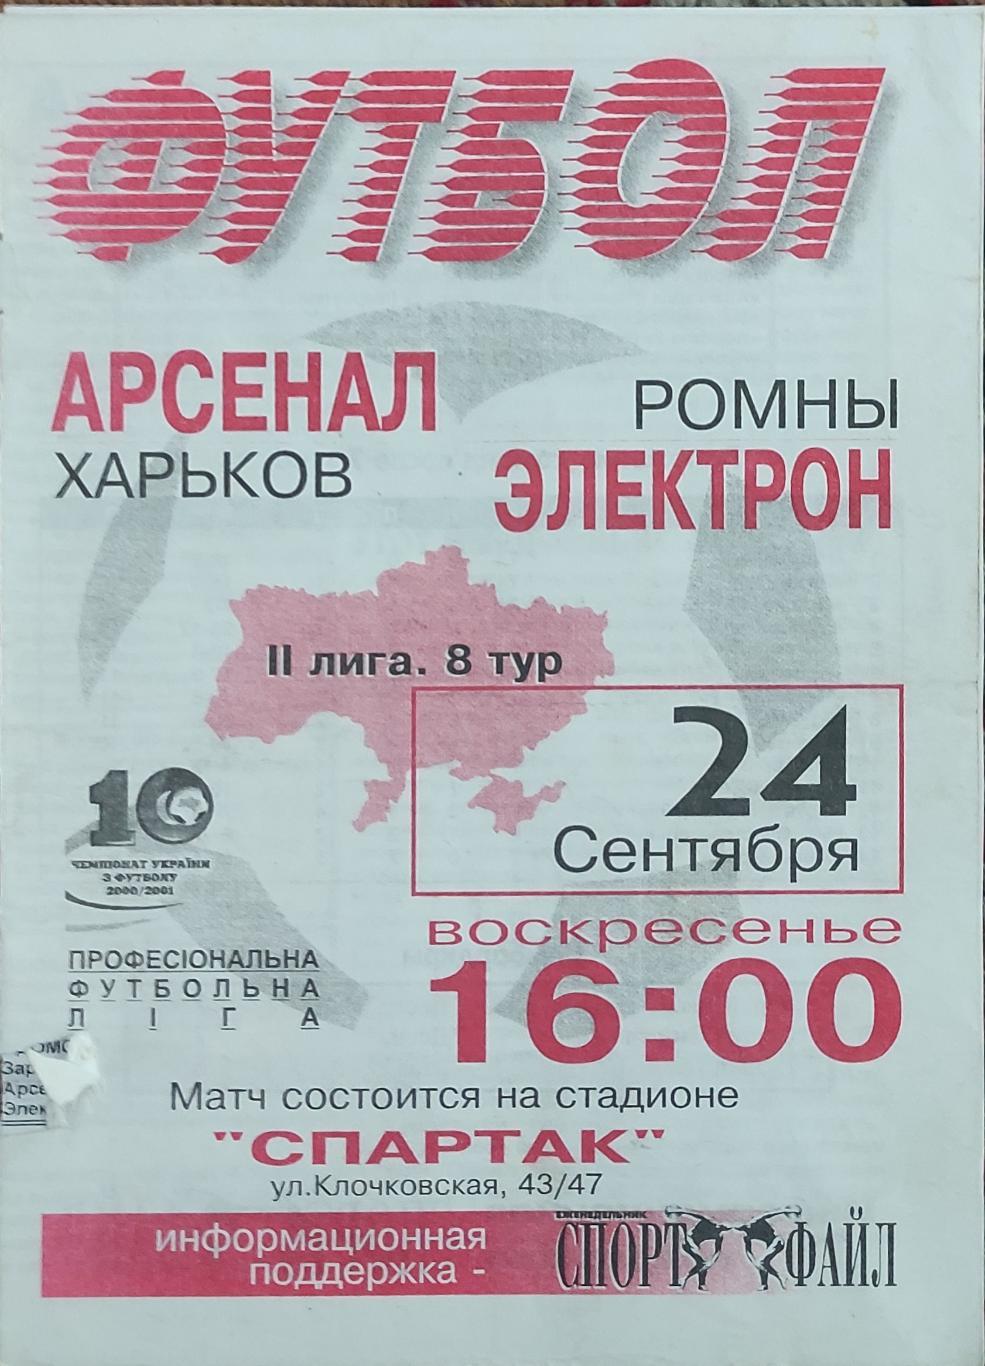 Арсенал Харьков -Электрон Ромны .24.09.2000